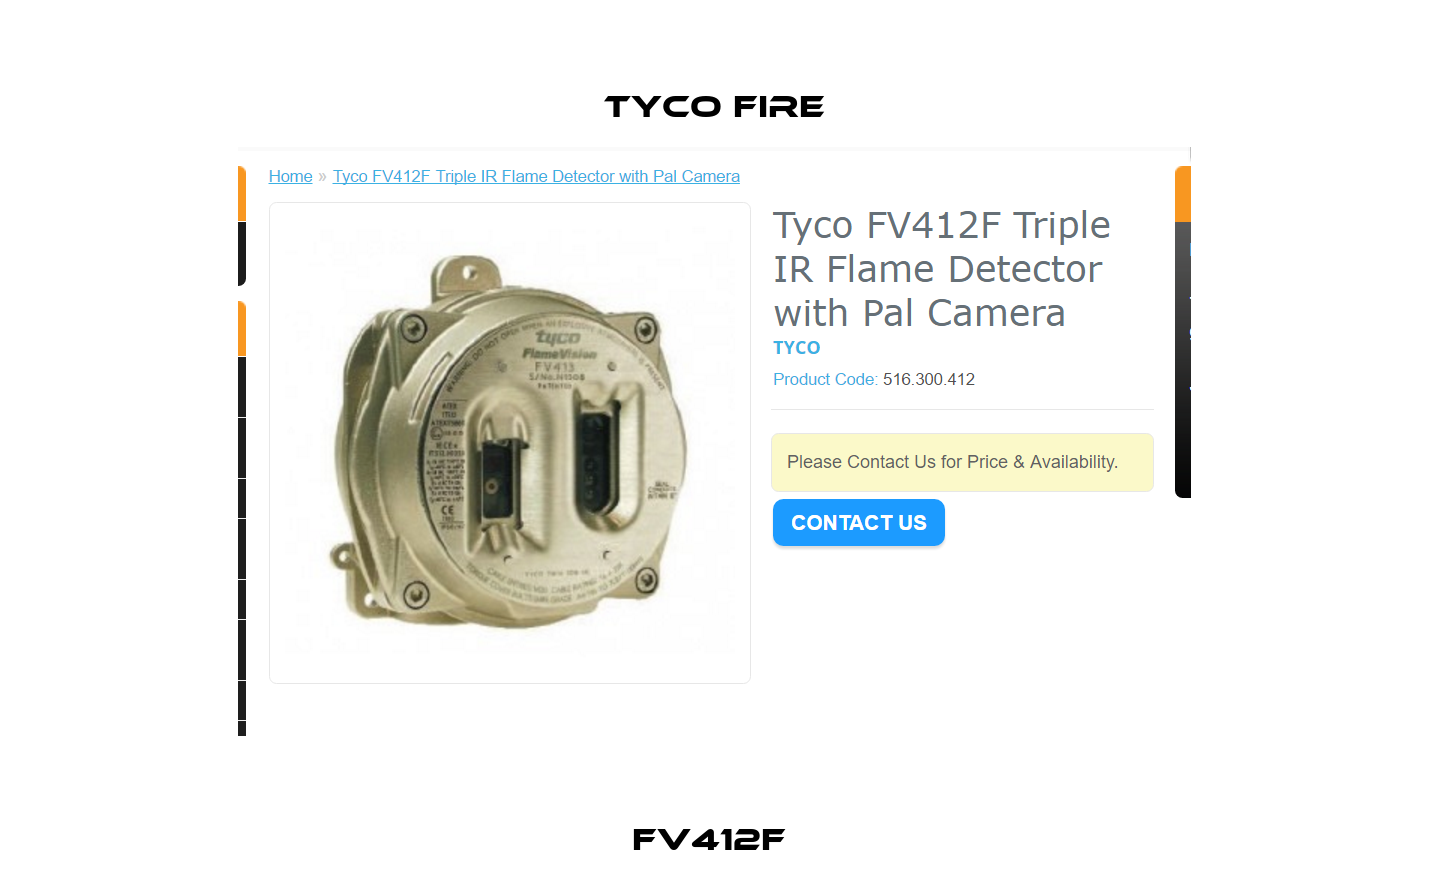 FV412F  Tyco Fire